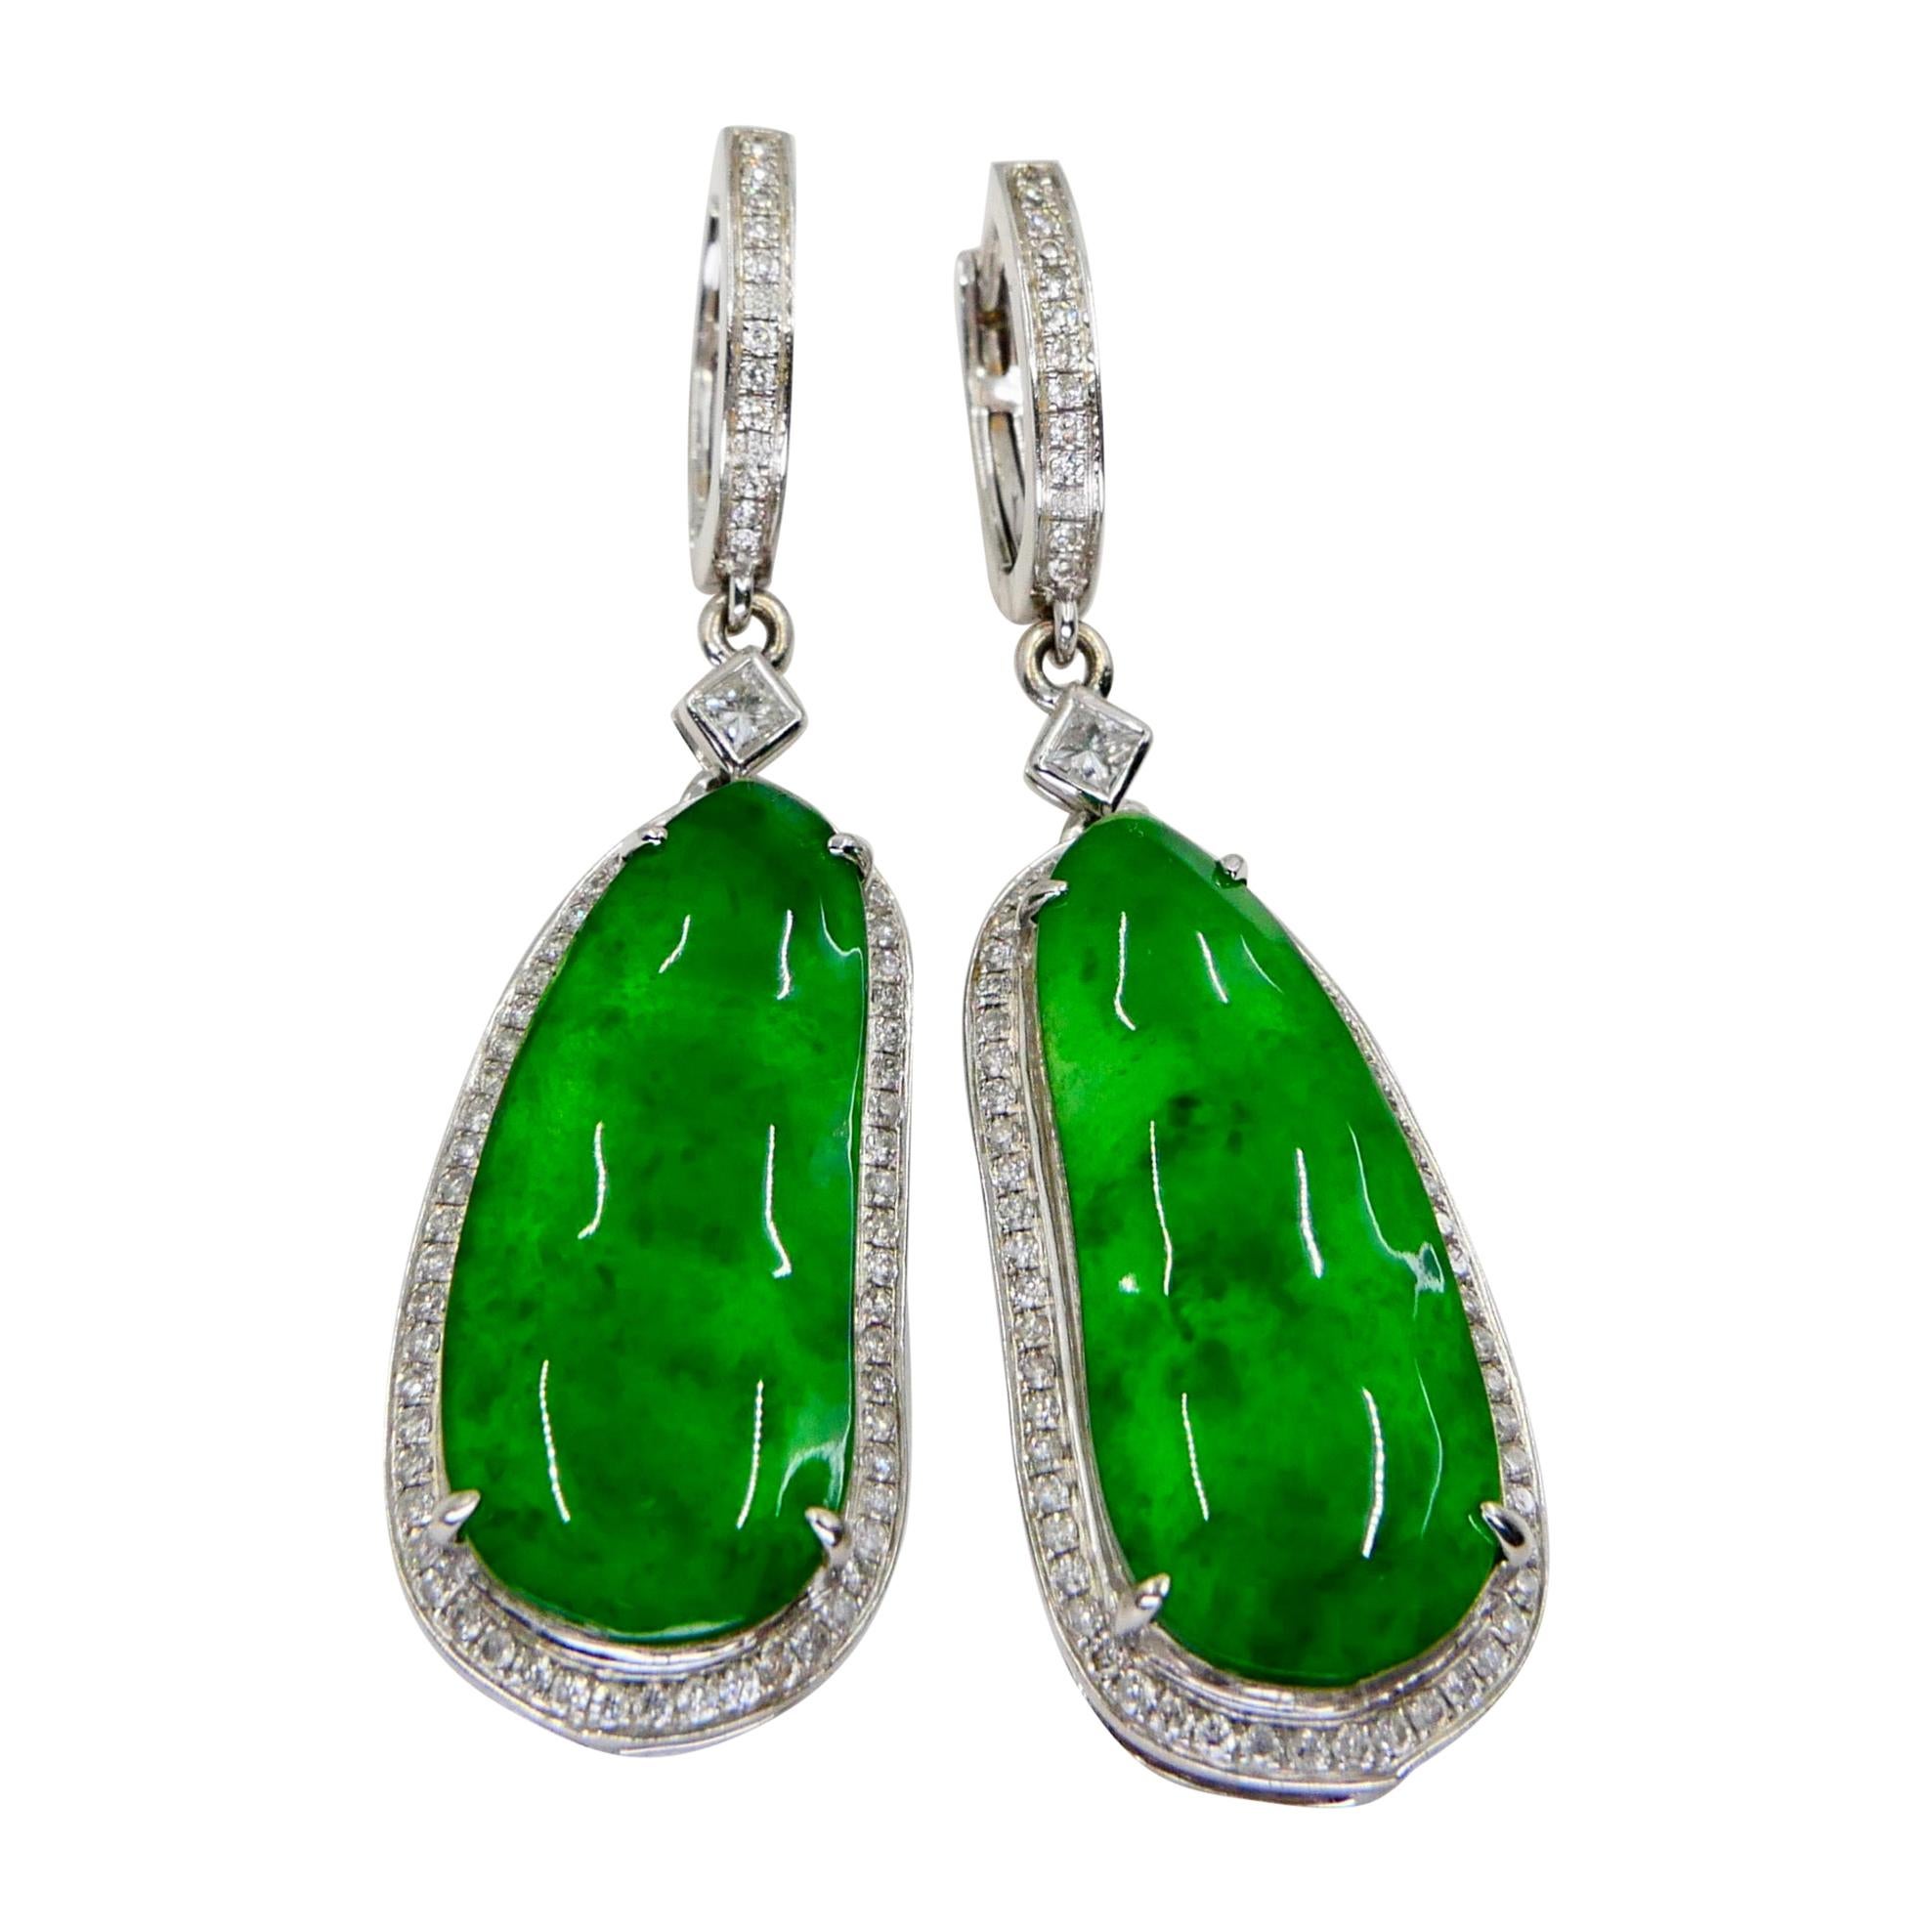 Certified Natural Type A Icy Jade Peapod Diamond Earrings, Glowing Apple Green